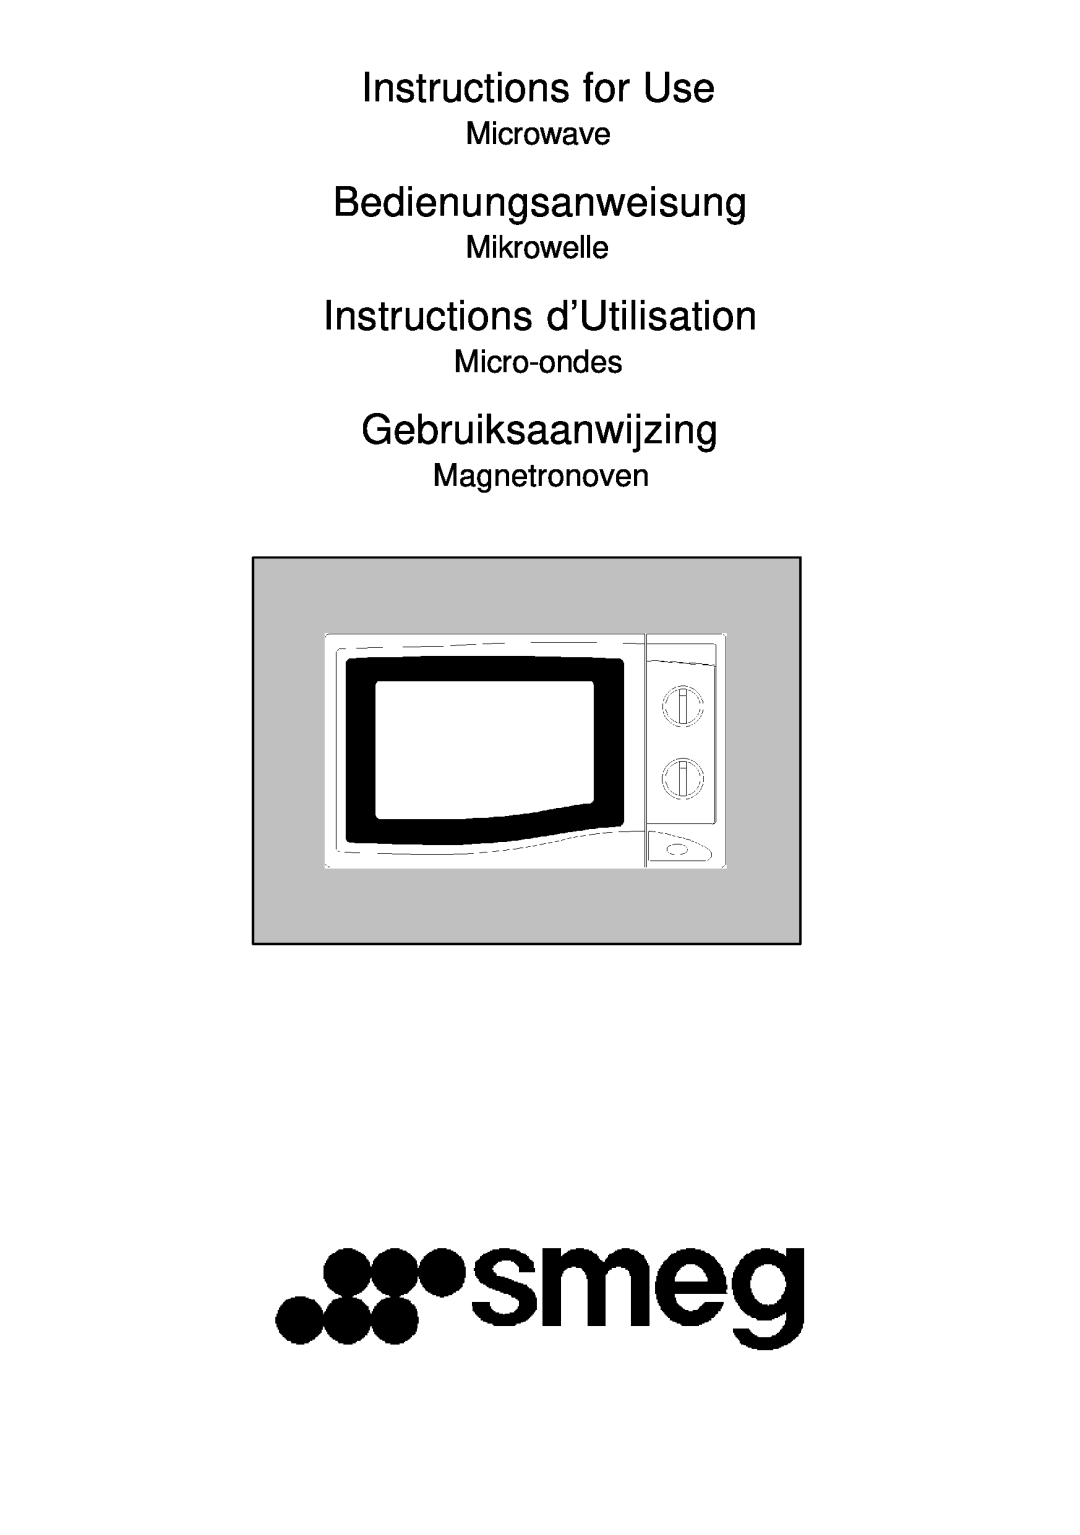 Smeg MM182X manual Instructions for Use, Bedienungsanweisung, Instructions d’Utilisation, Gebruiksaanwijzing, Microwave 